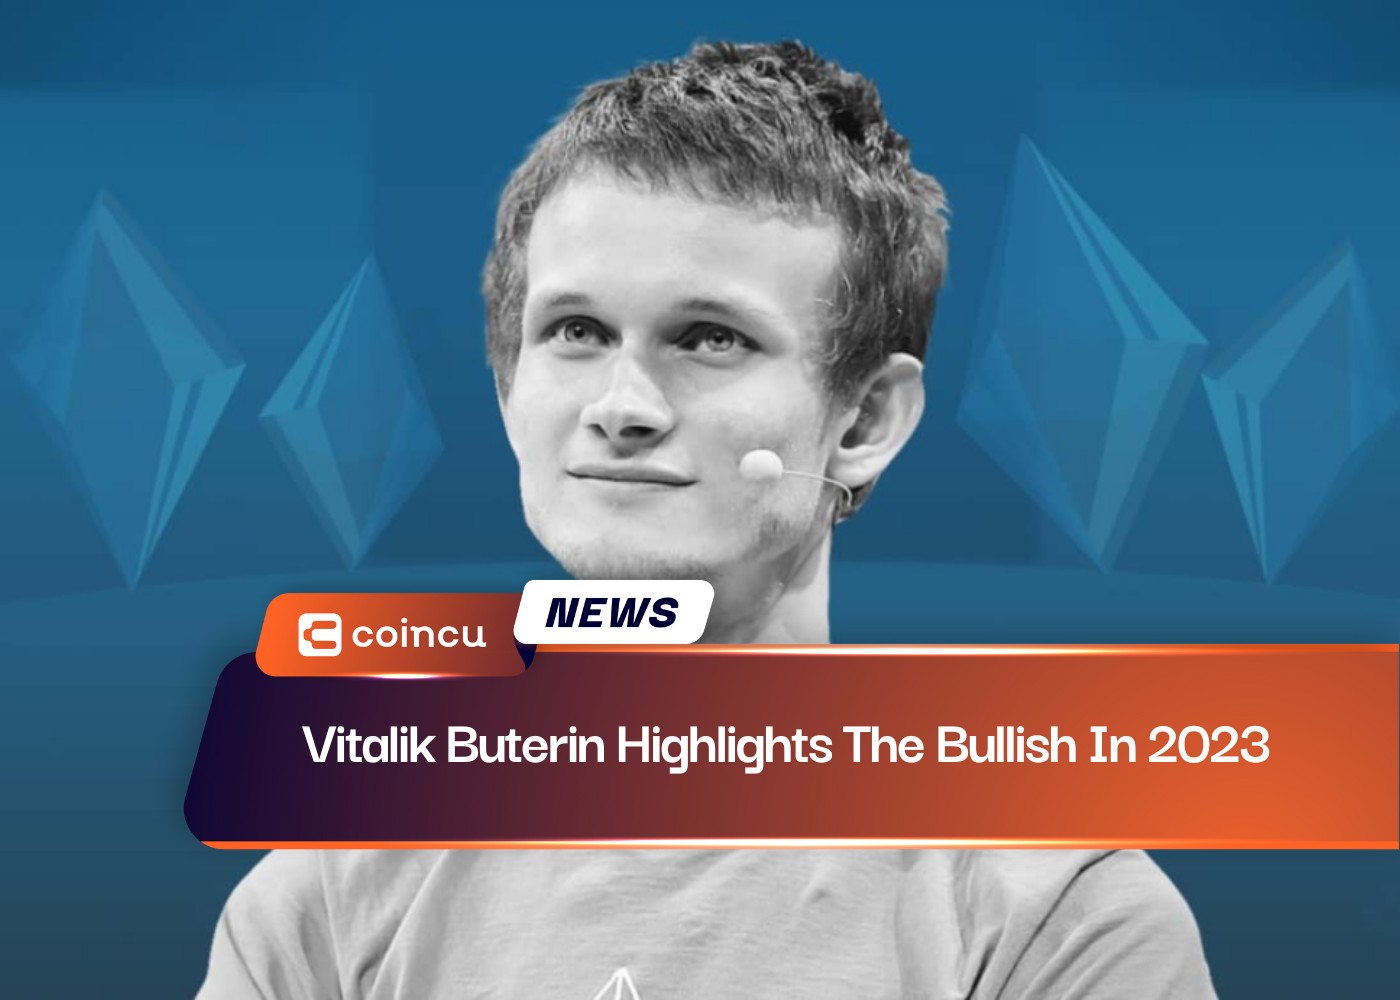 Vitalik Buterin Highlights The Bullish In 2023